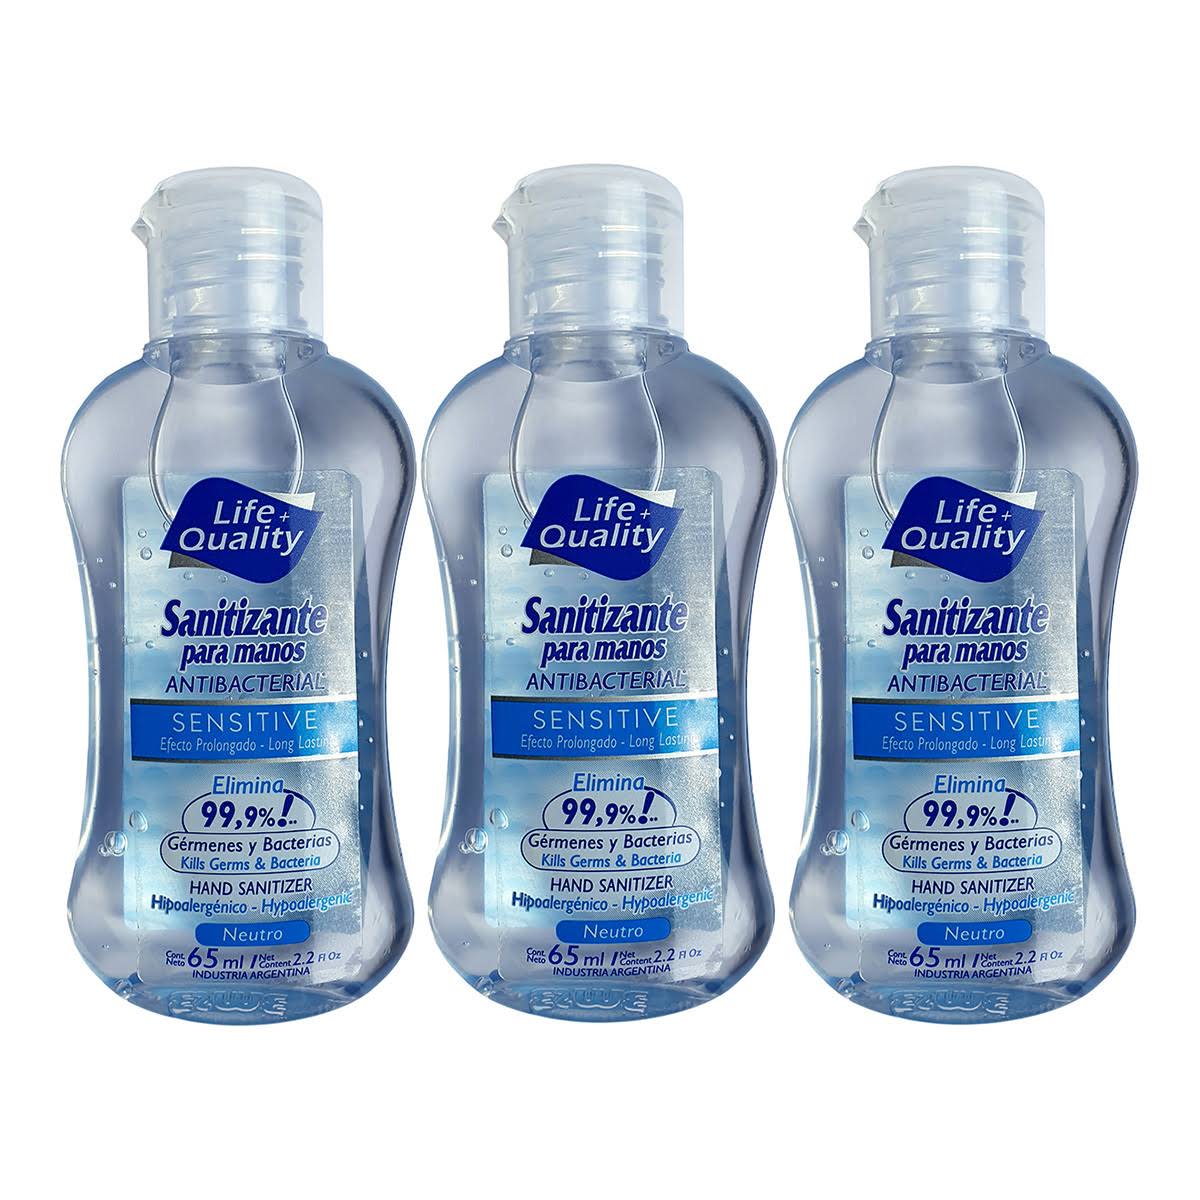 LifeQuality Sanitizante Antibacterial Hand Sanitizer Gel 3 x 65ml Sensitive Skin Formula